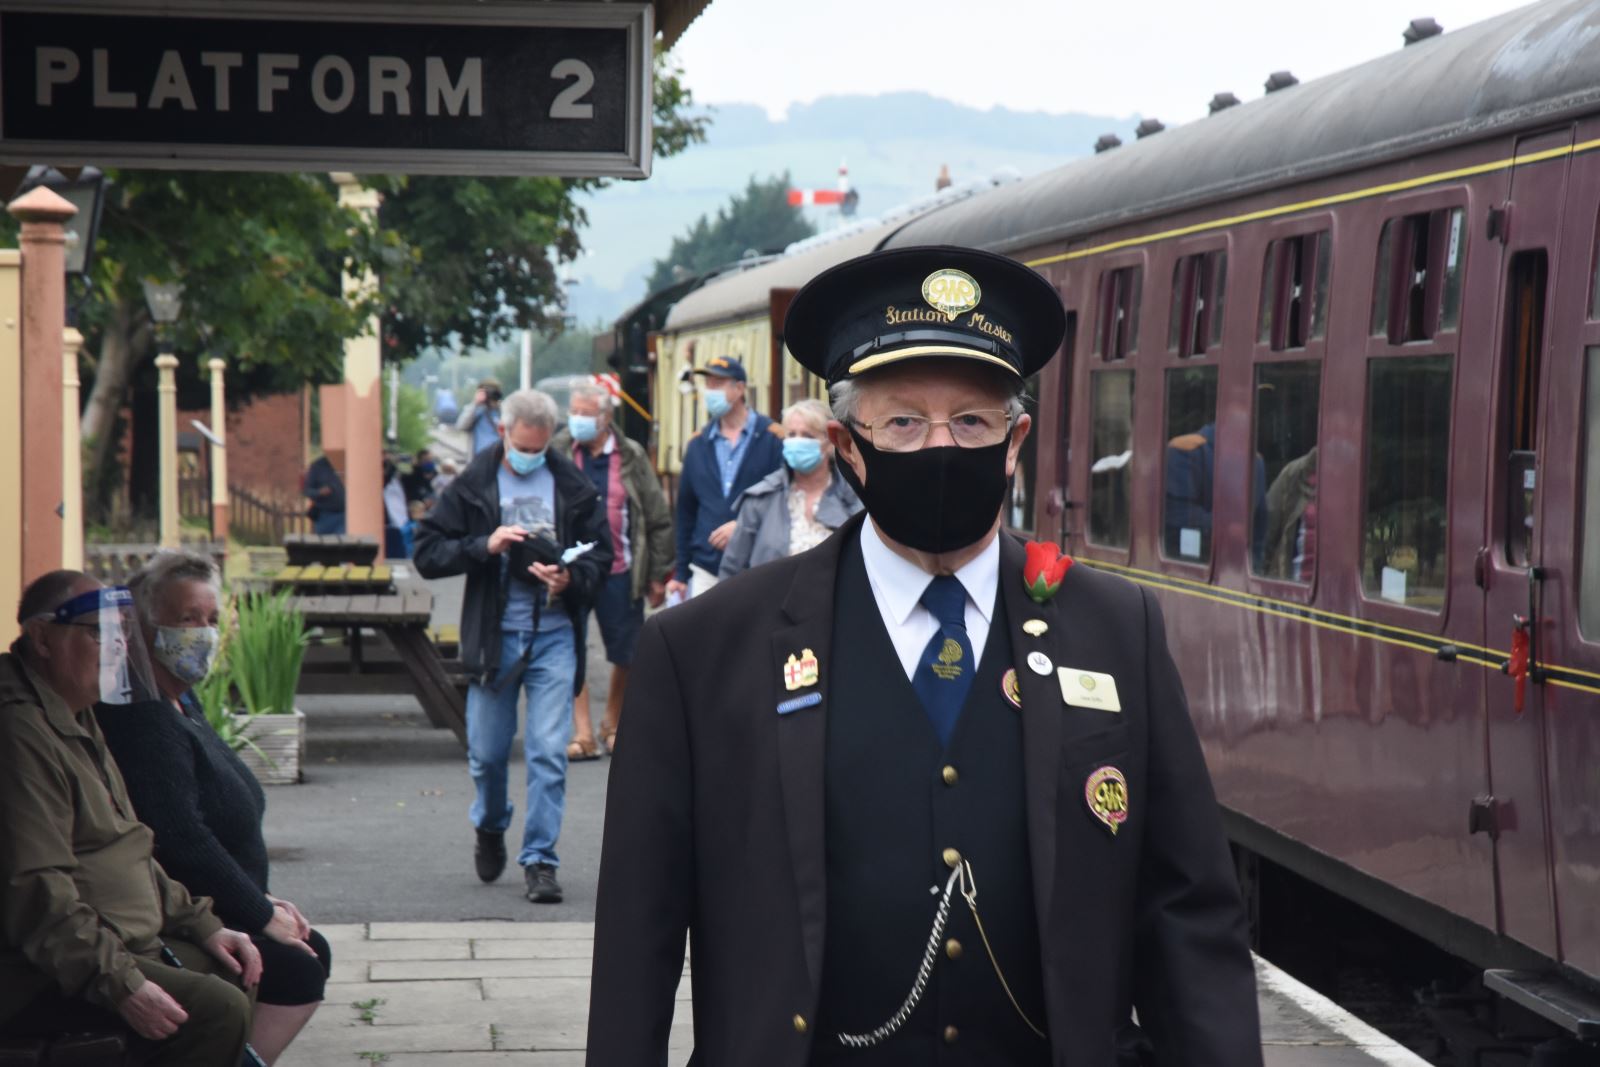 Train guard wearing mask at GWSR